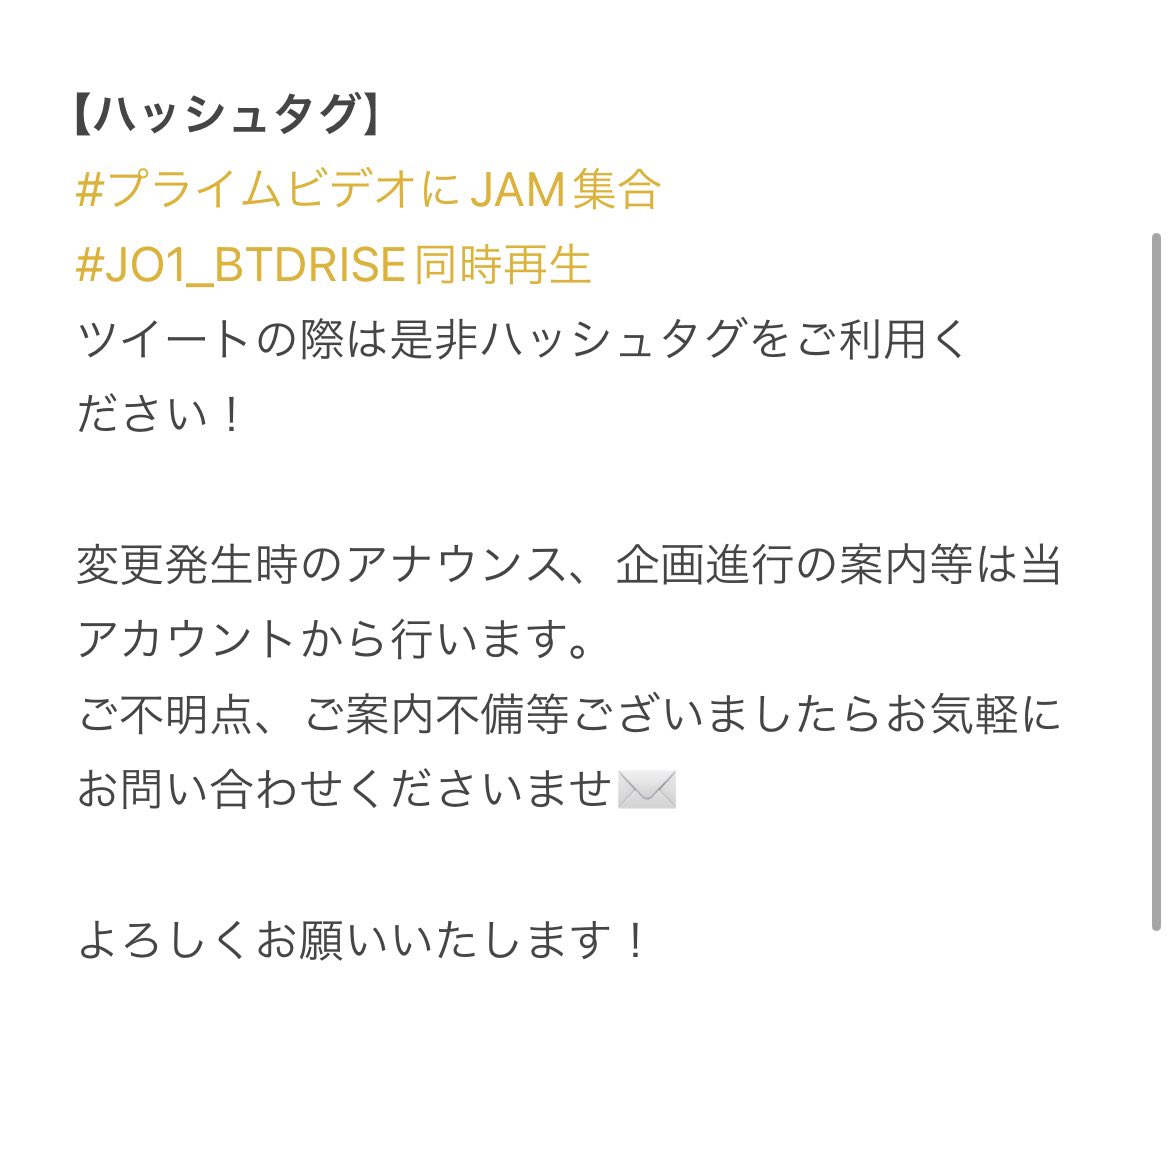 🎤Prime Video「JO1 2ND ARENA LIVE TOUR 'BEYOND THE DARK:RISE in KYOCERA DOME OSAKA'」の同時再生会のお知らせ💫

【日時】
5/17 (金) 22:00〜

詳細については添付画像をご確認ください。

ご不明点等ございましたらお気軽にお問い合わせくださいませ✉️

よろしくお願いいたします🌅